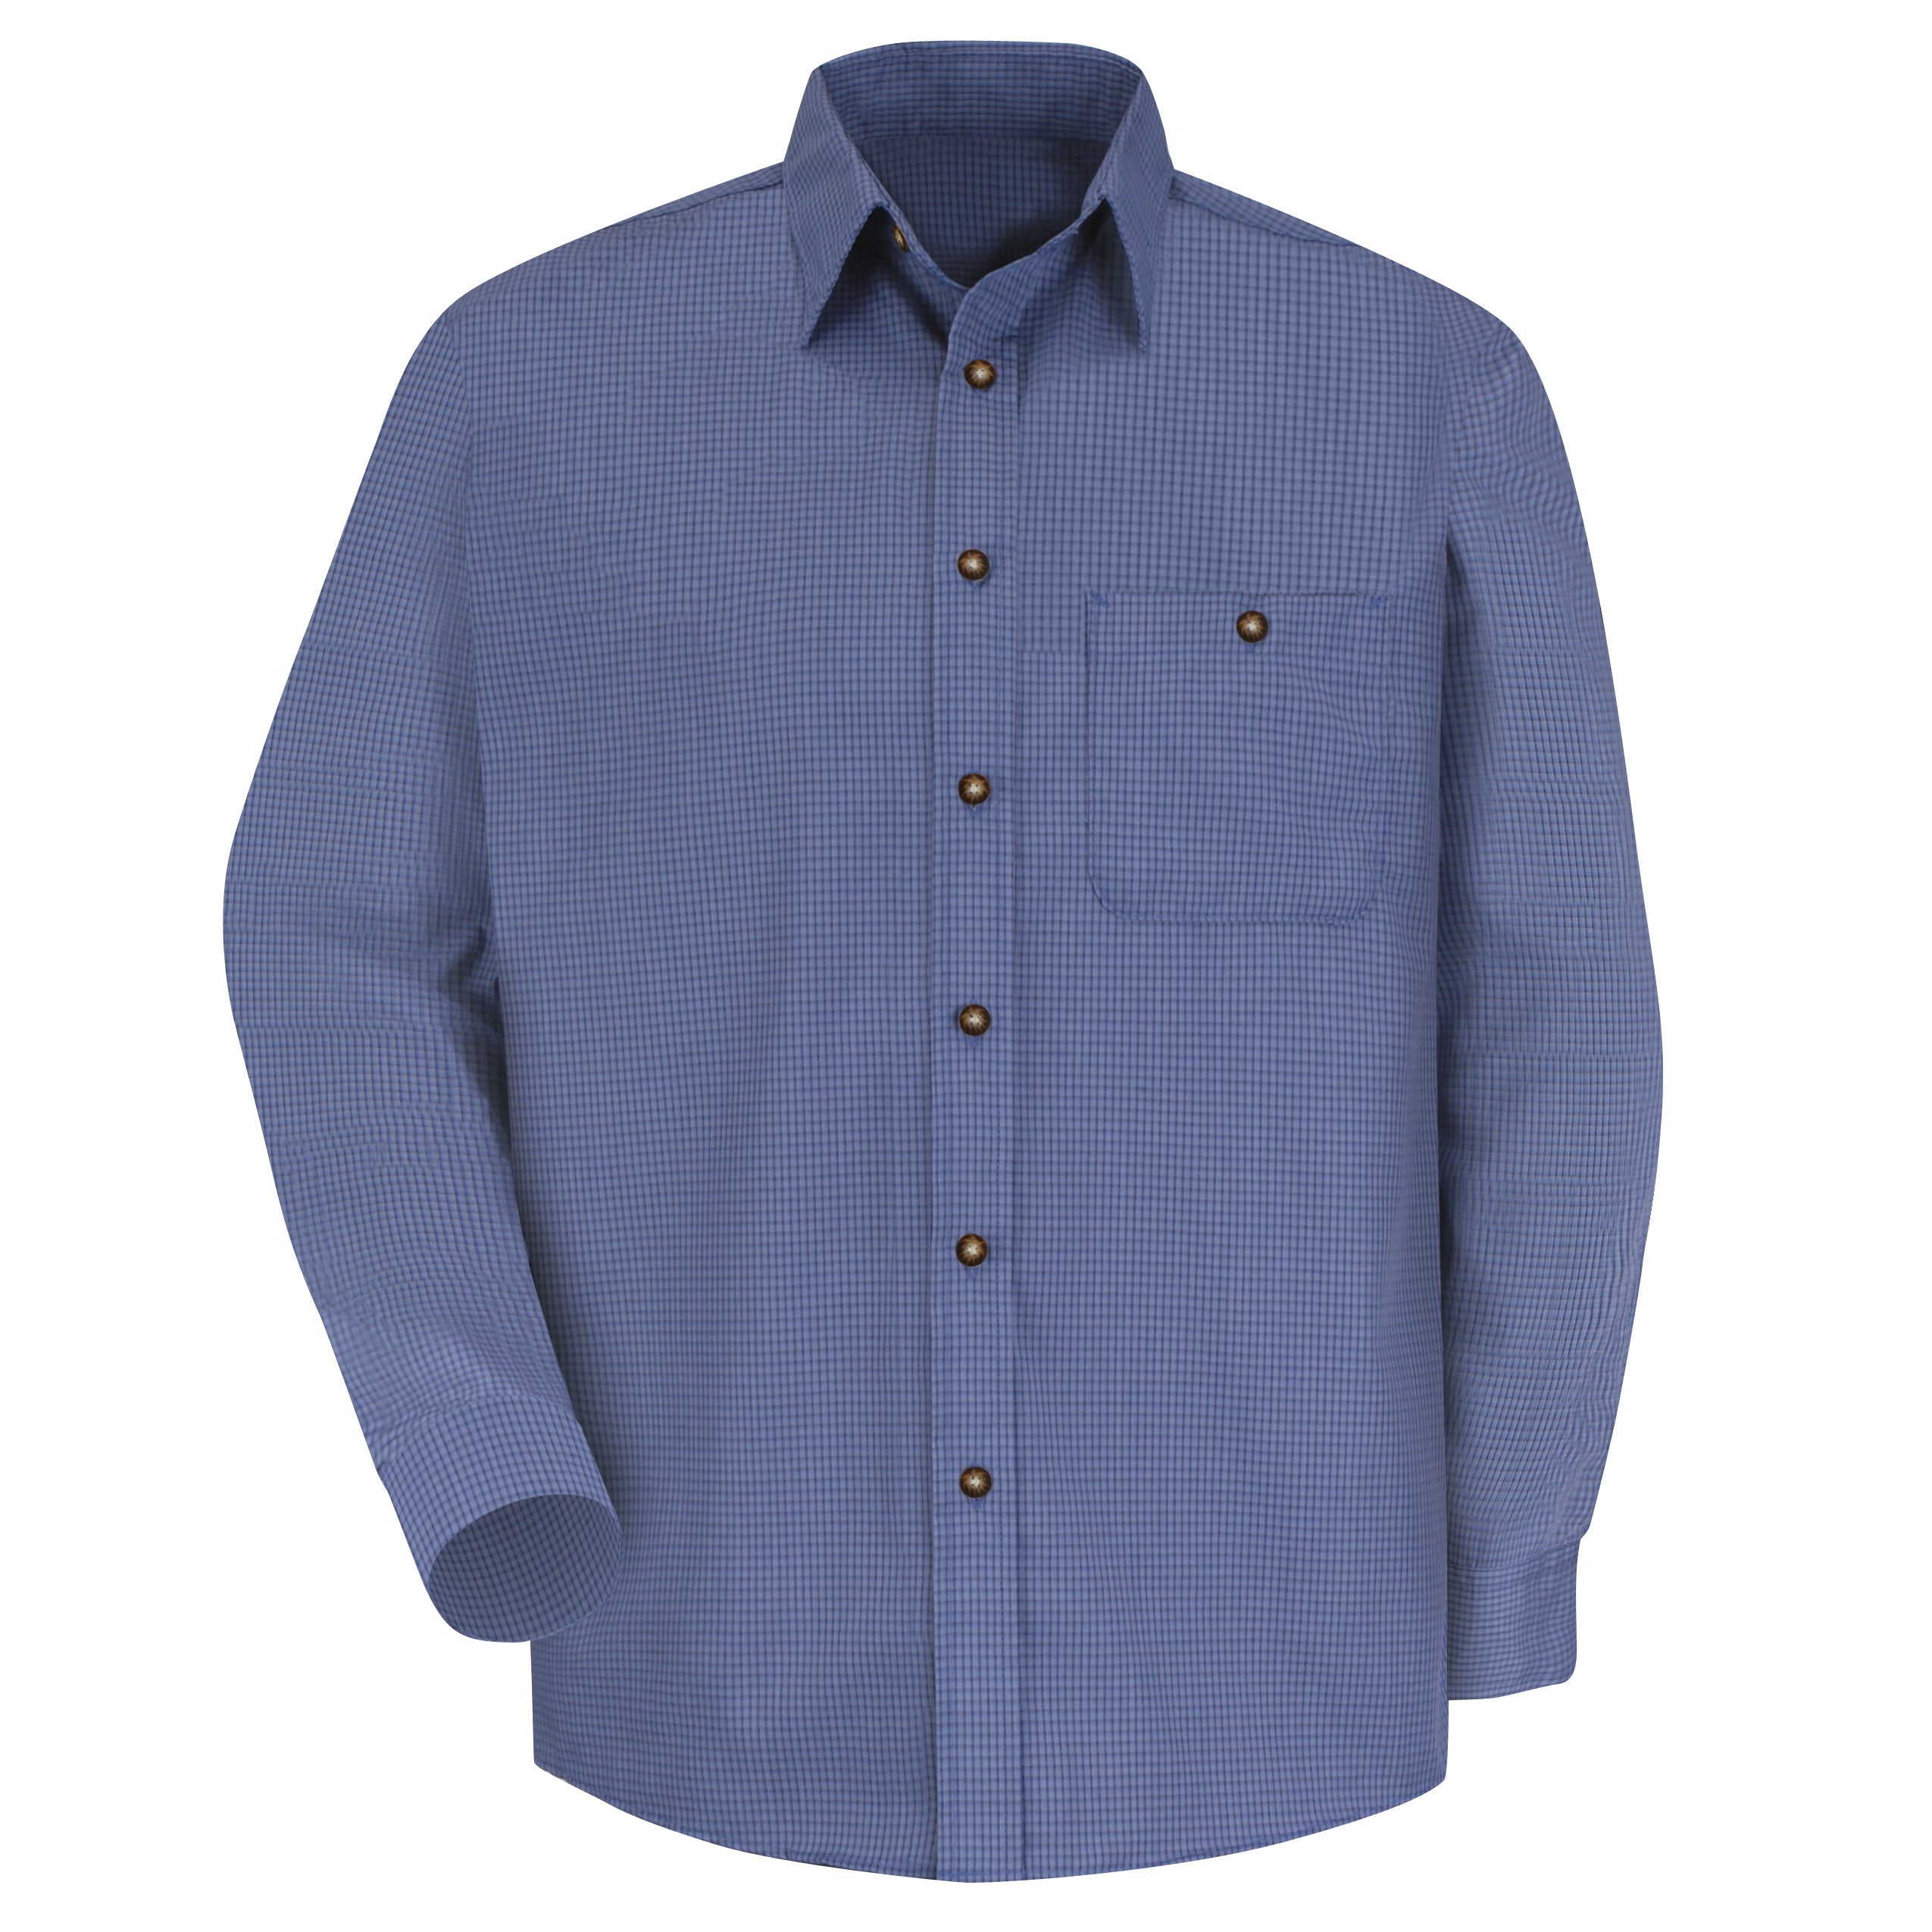 Men's Long Sleeve Mini-Plaid Uniform Shirt SP74 - Grey/Blue Mini Plaid-eSafety Supplies, Inc